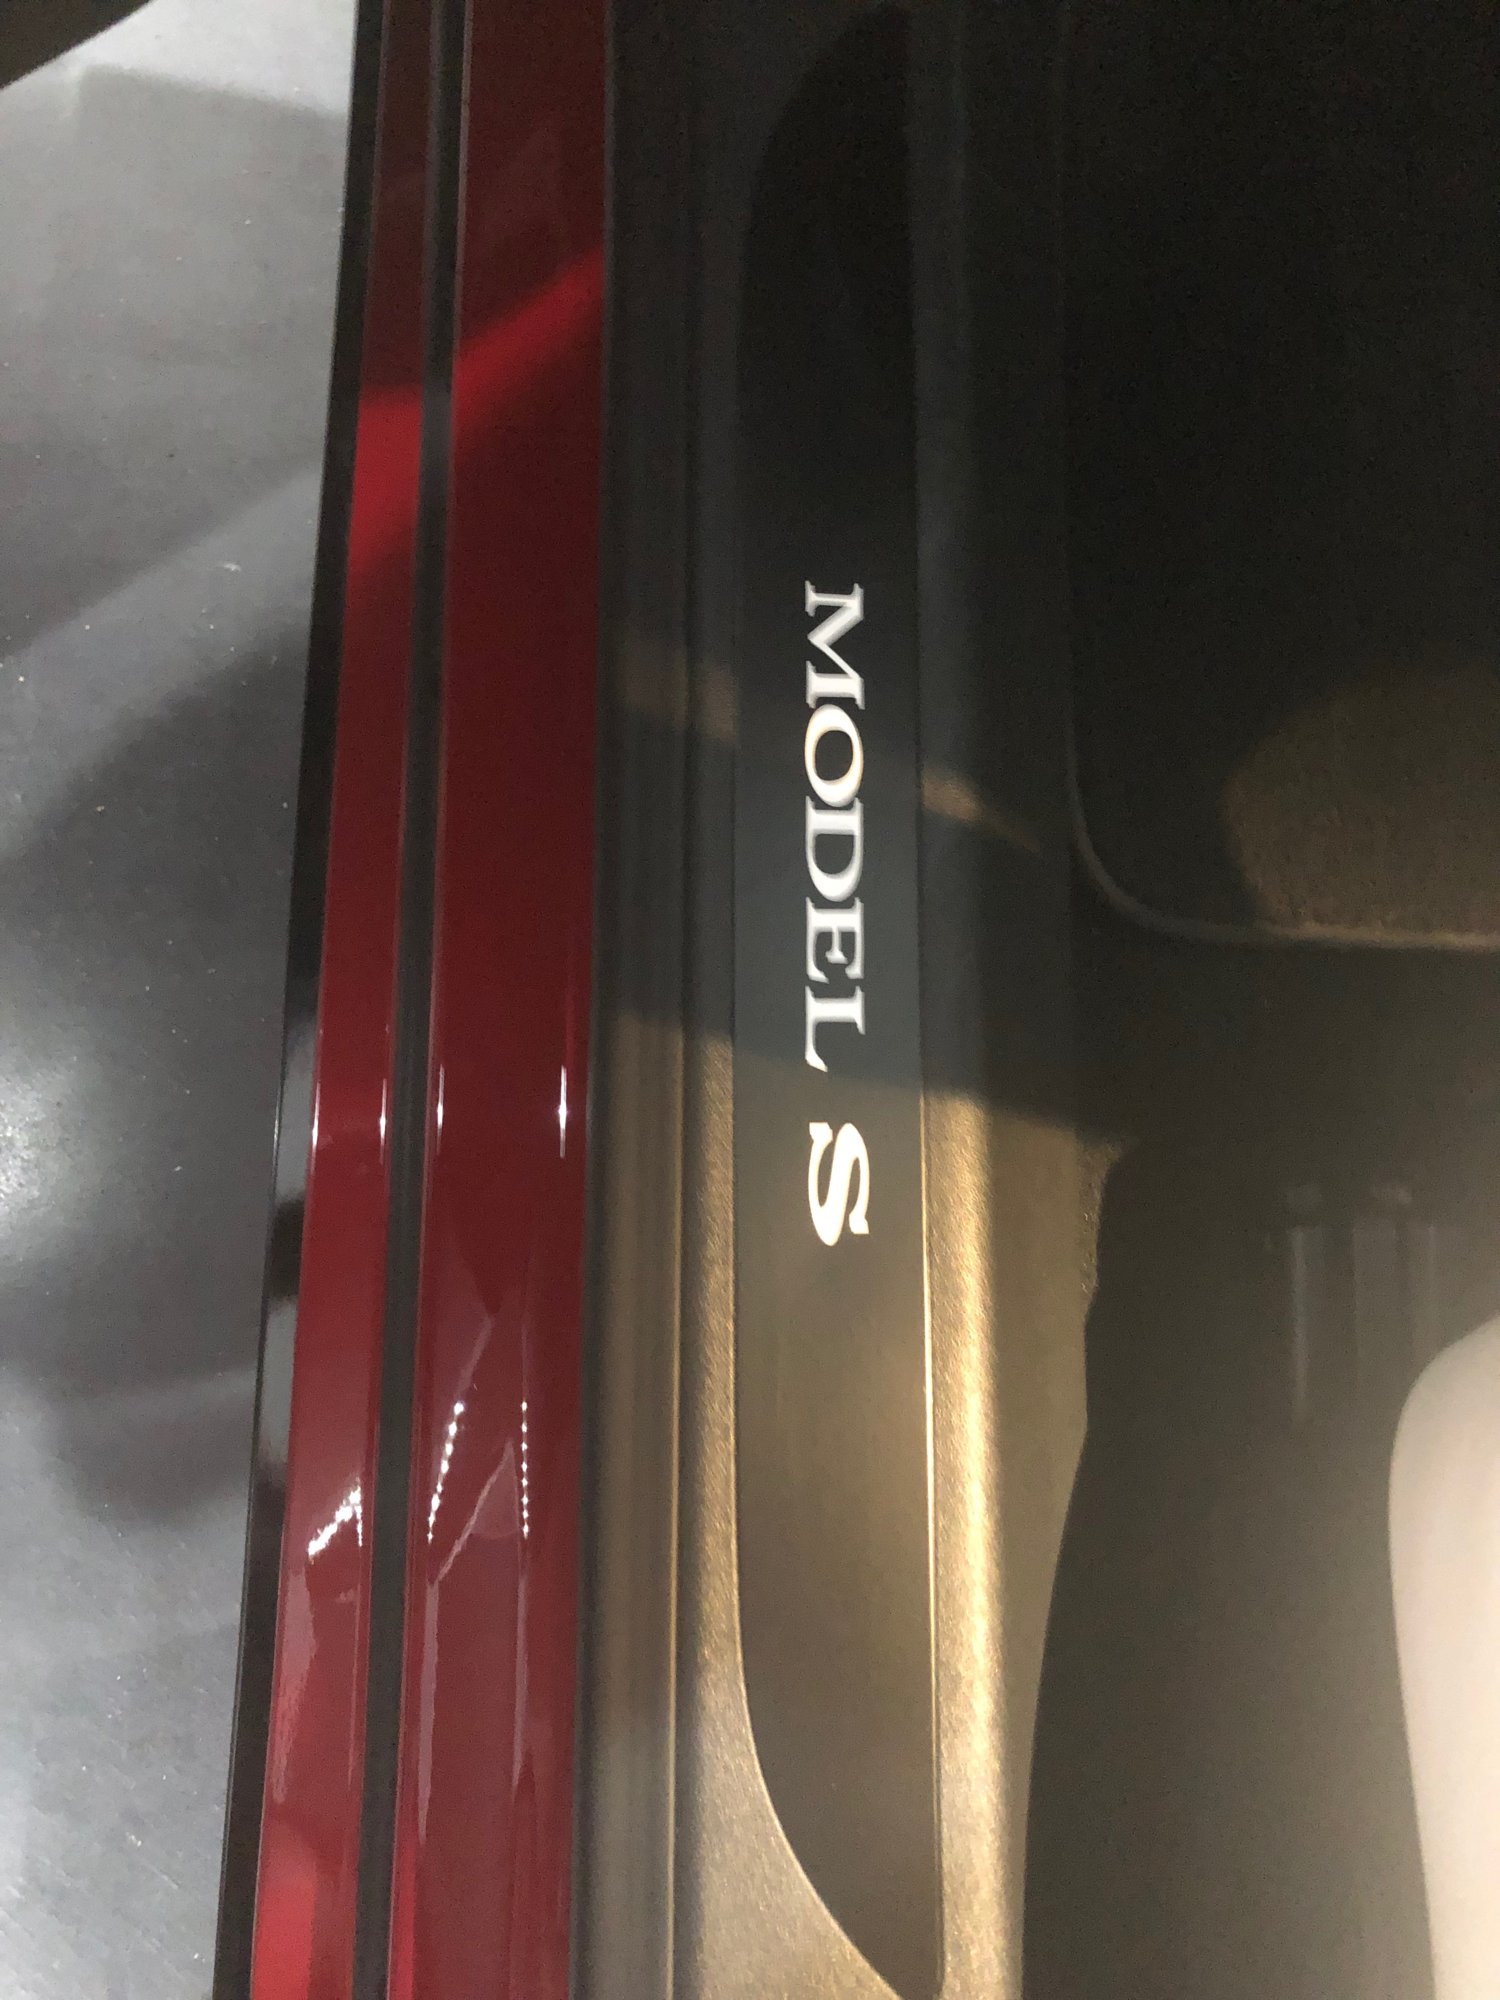 Model S Doorsill.jpeg